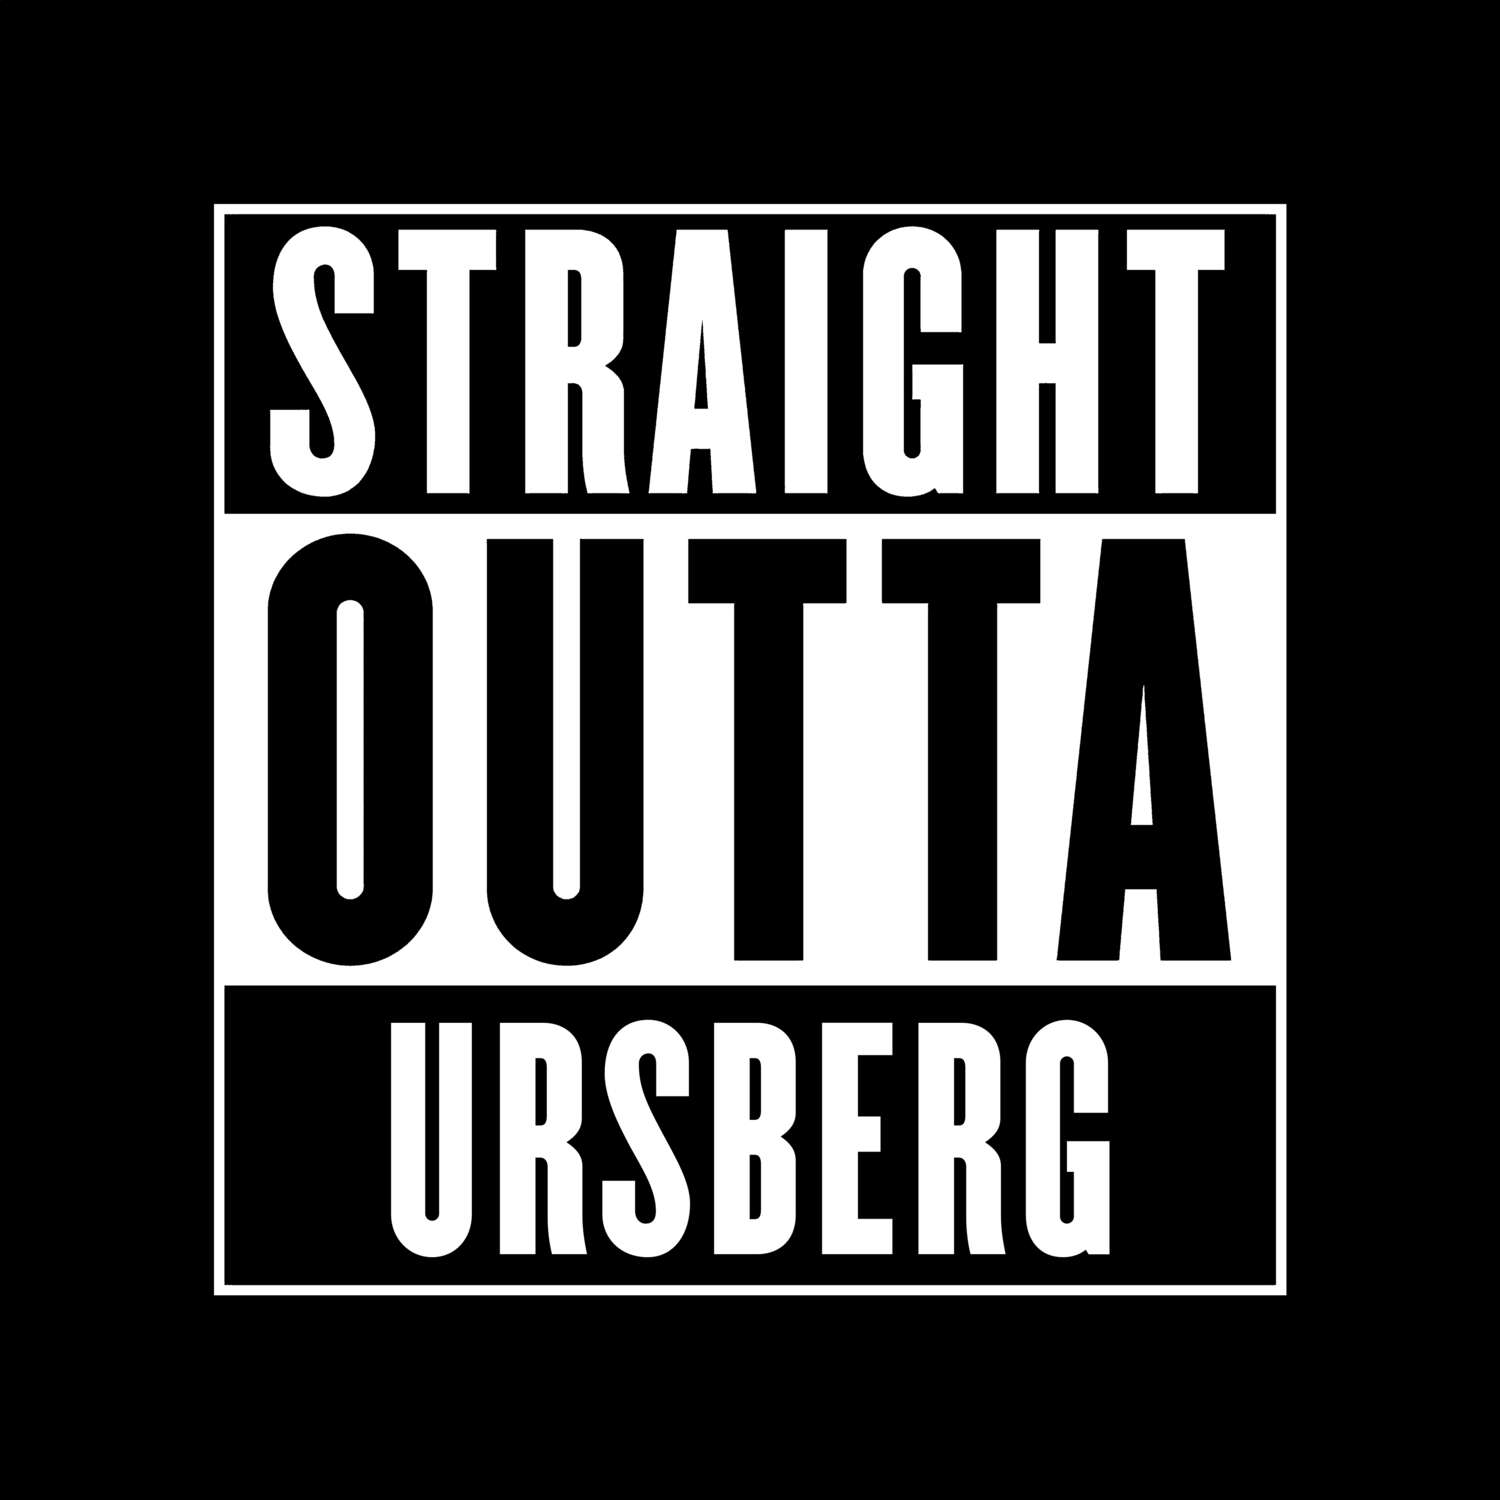 Ursberg T-Shirt »Straight Outta«